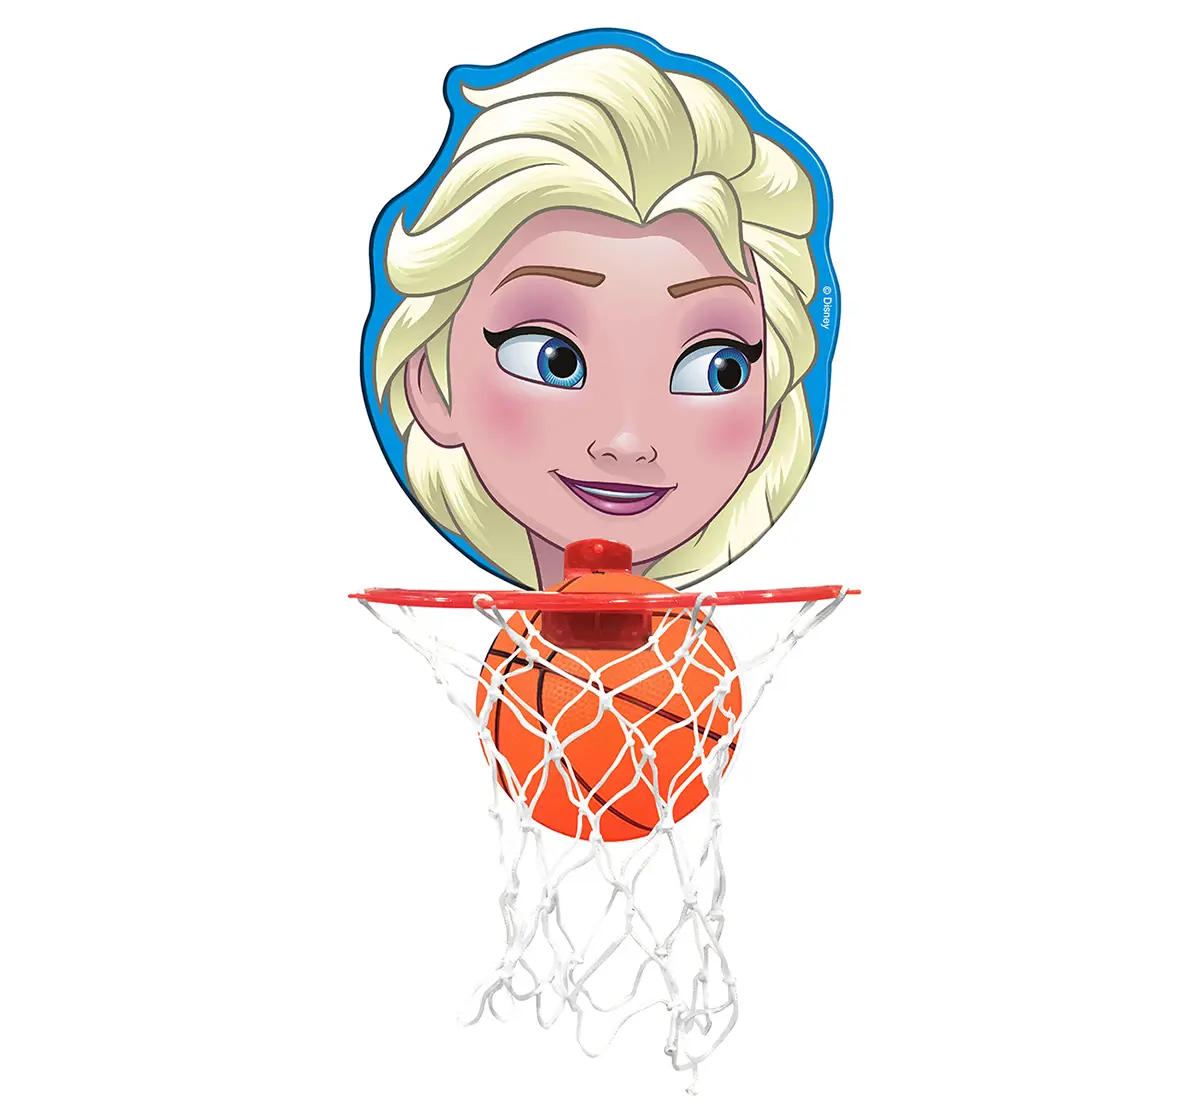 IToys Disney Frozen Face shape basket ball set for kids,  3Y+(Multicolour)